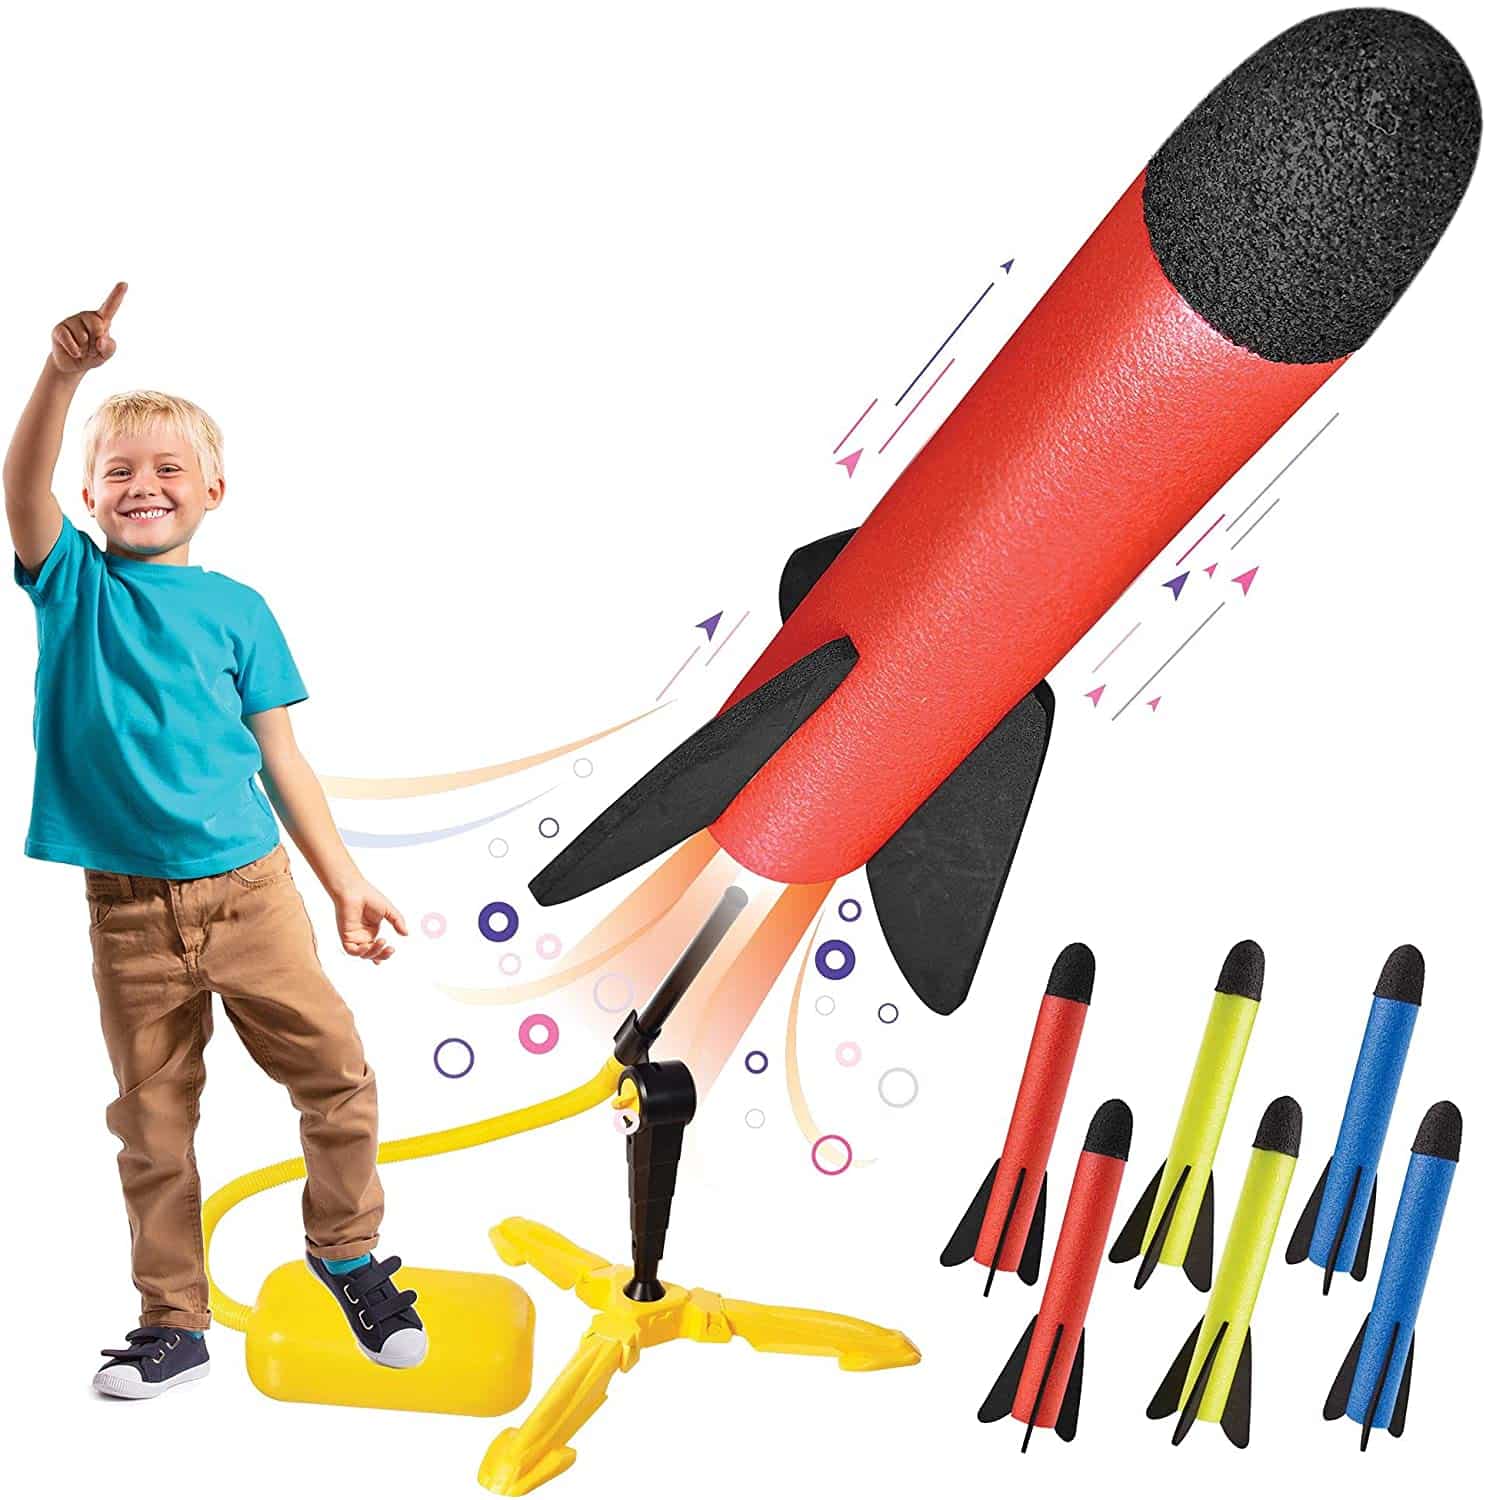 Toy Rocket Launcher